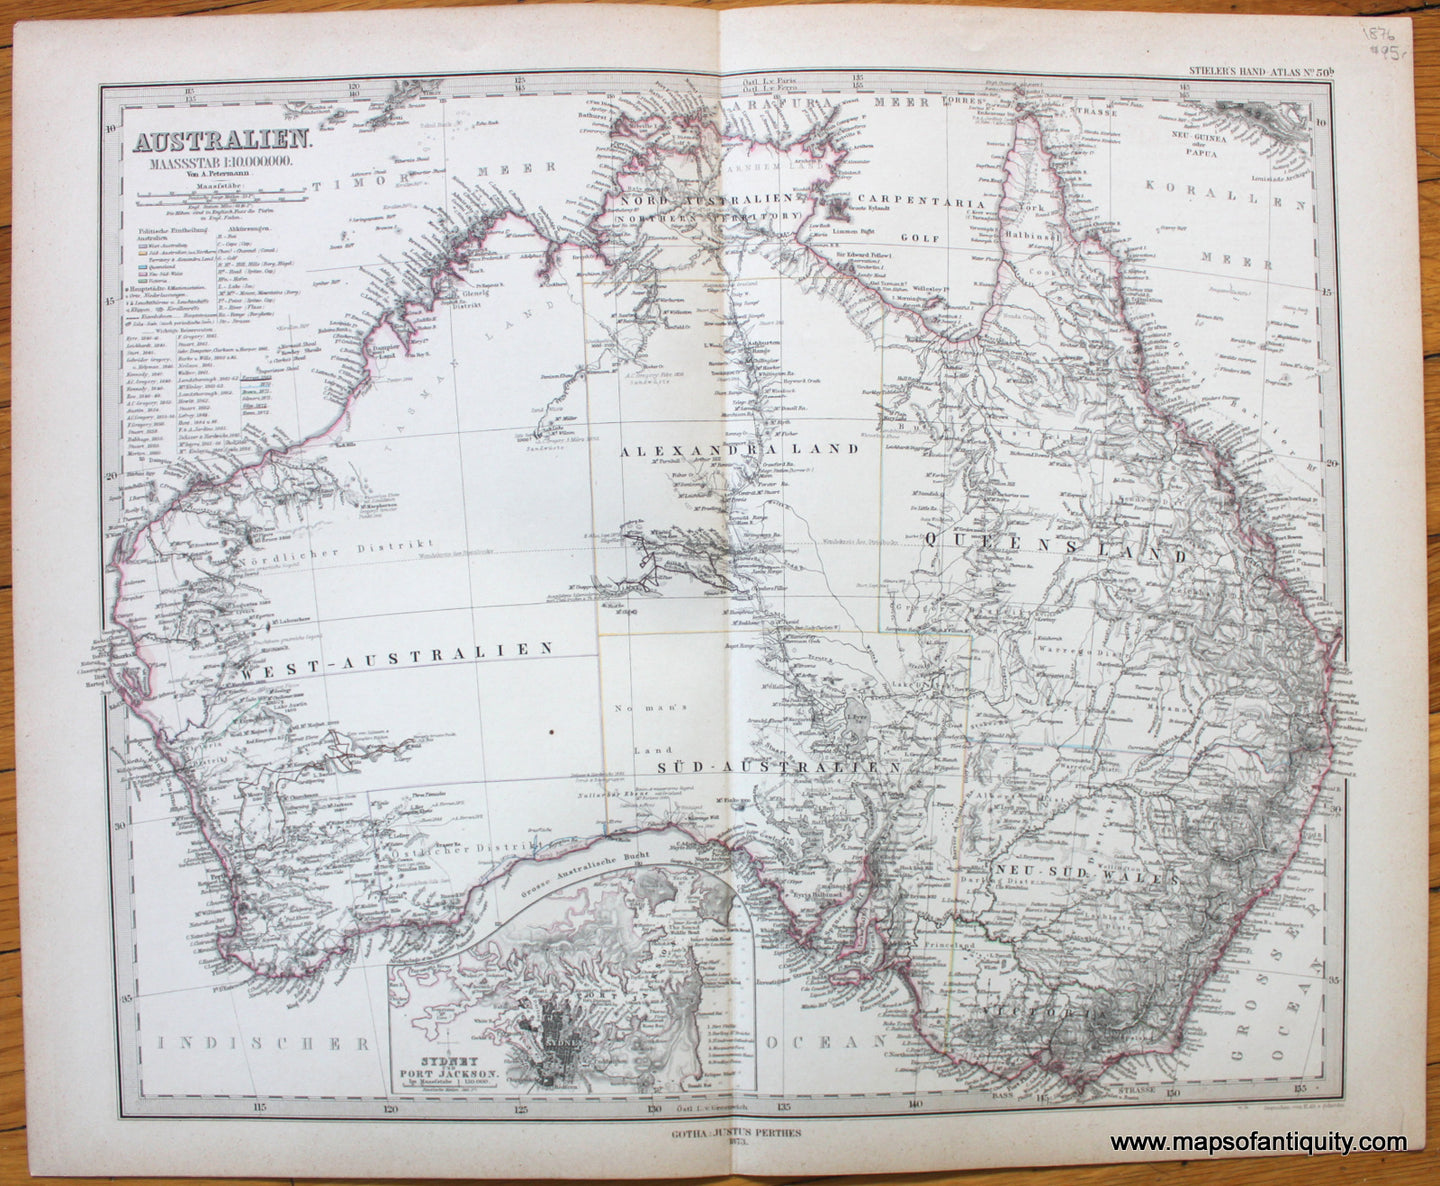 Antique-Map-Australien-Australia-Sydney-Port-Jackson-Stieler-1876-1870s-1800s-19th-century-Maps-of-Antiquity